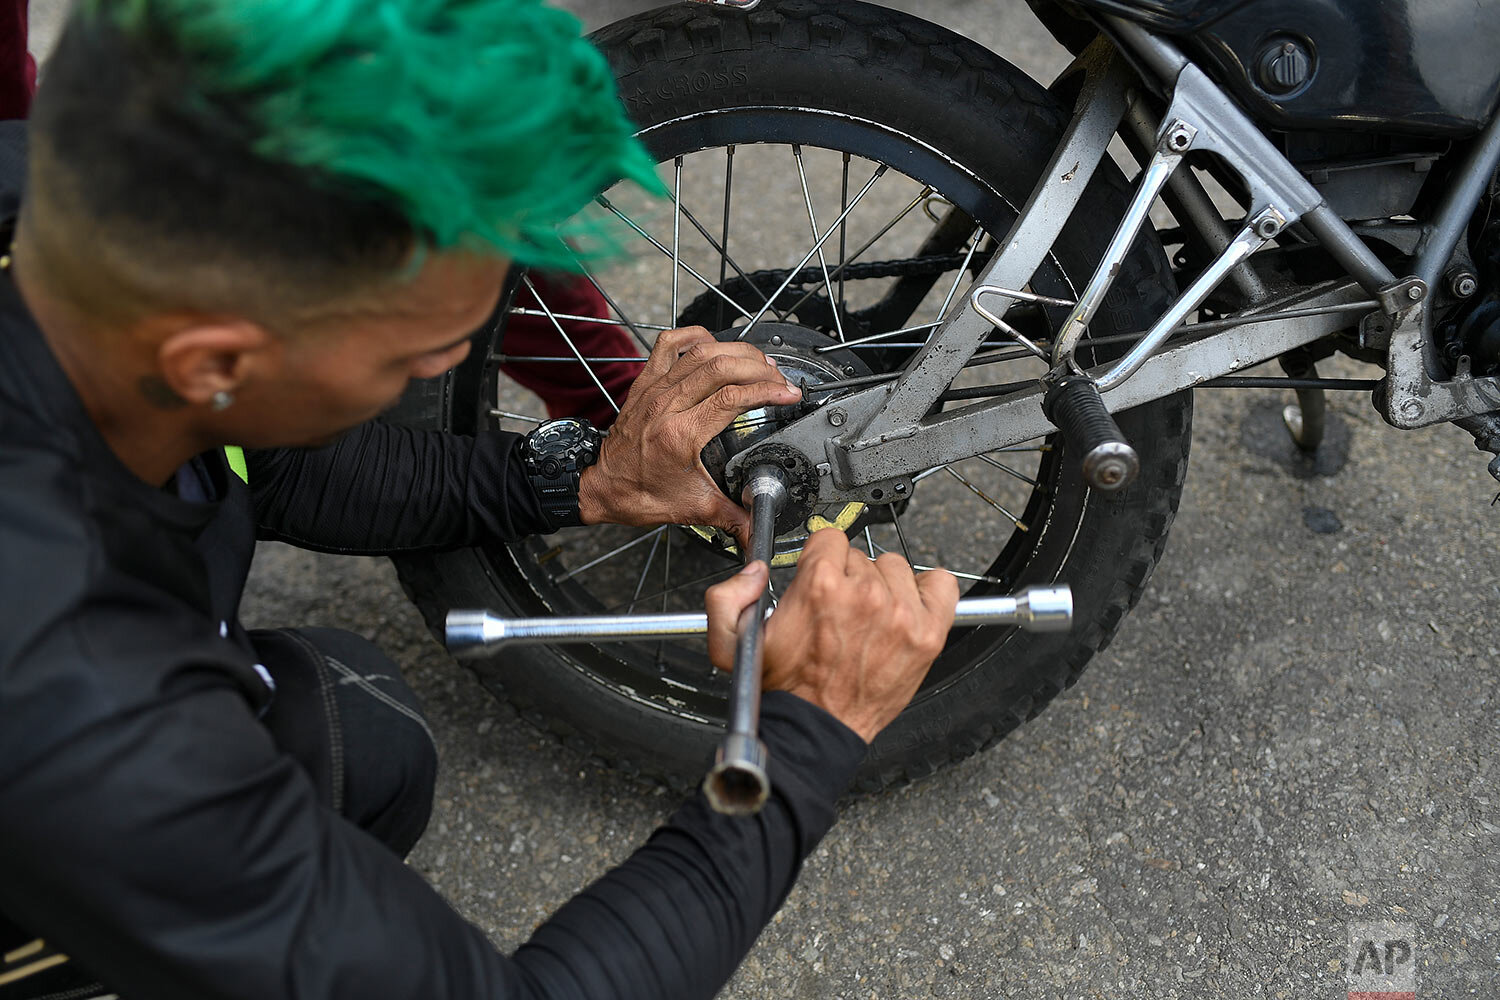  Motorcycle stuntman Pedro Aldana fixes his brakes during an exhibition in the Ojo de Agua neighborhood of Caracas, Venezuela, Sunday, Jan. 10, 2021. (AP Photo/Matias Delacroix) 